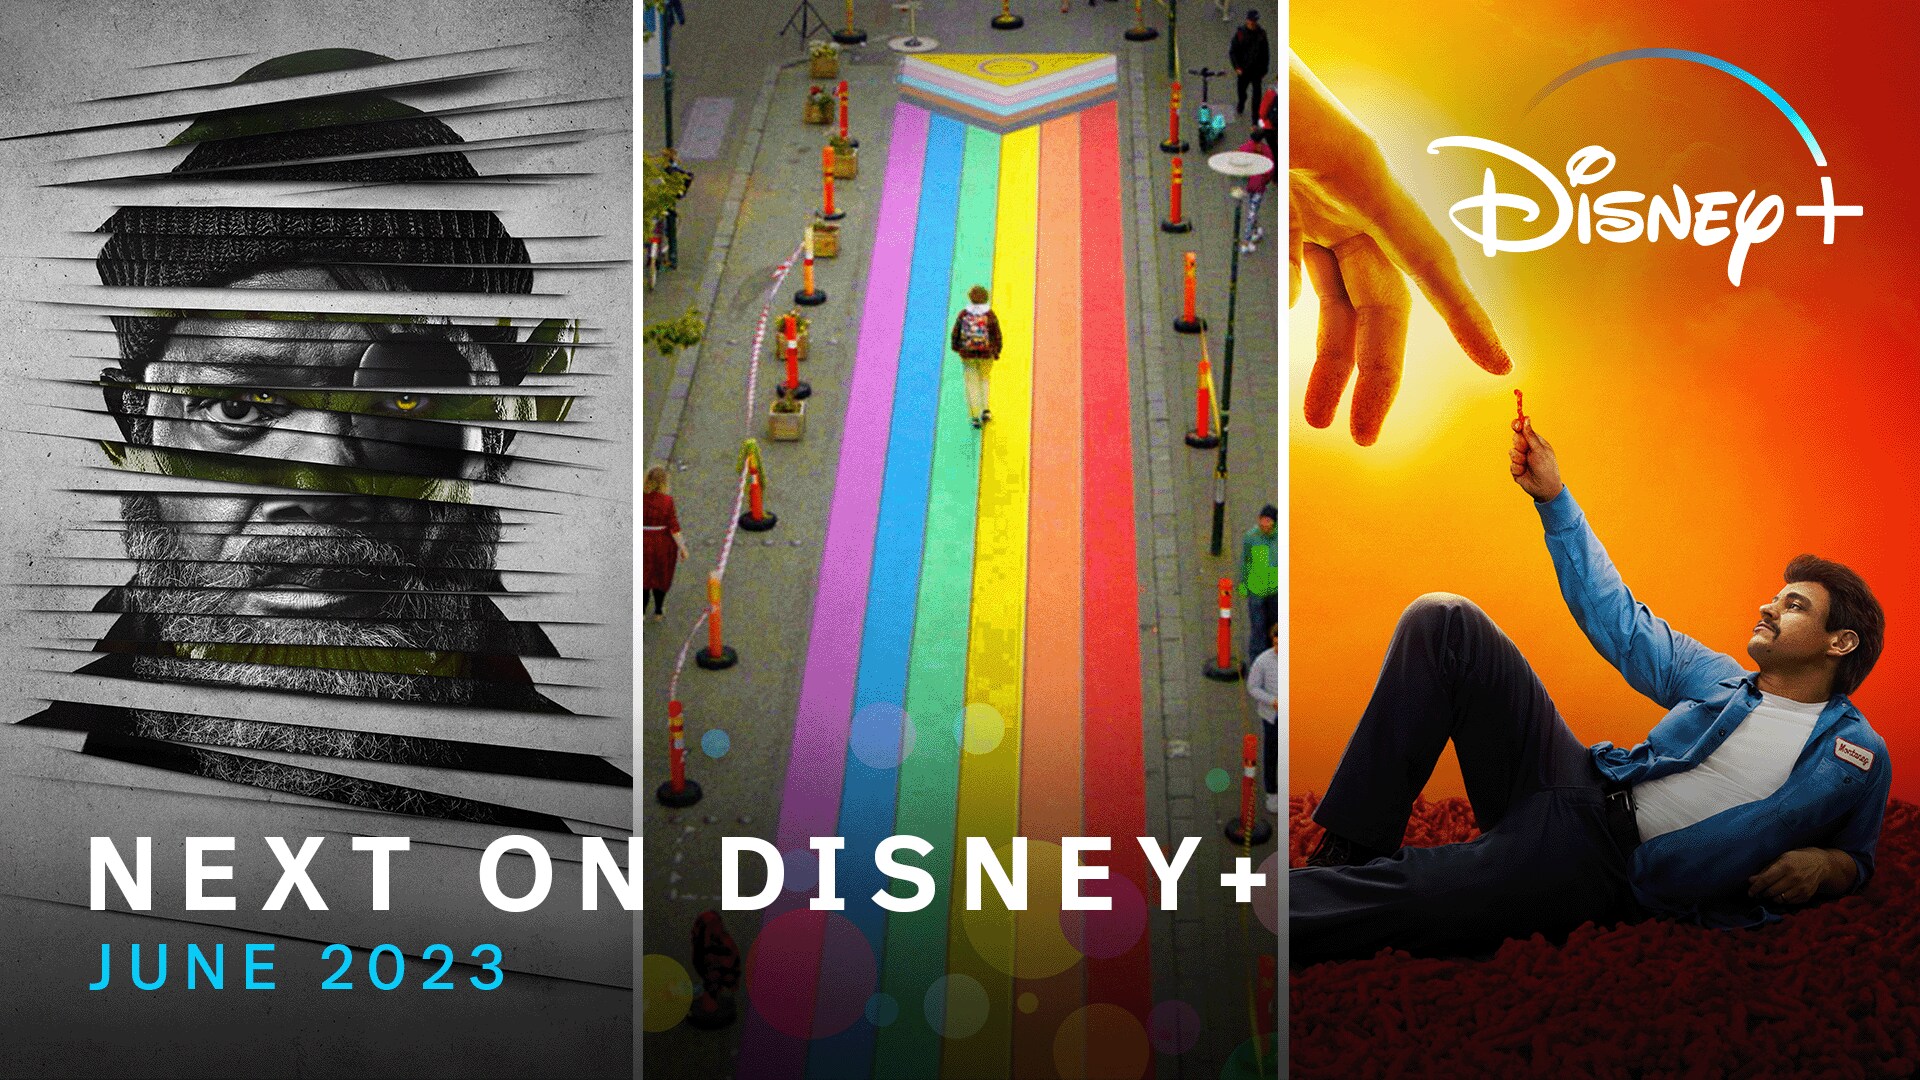 Next On Disney+ | June 2023